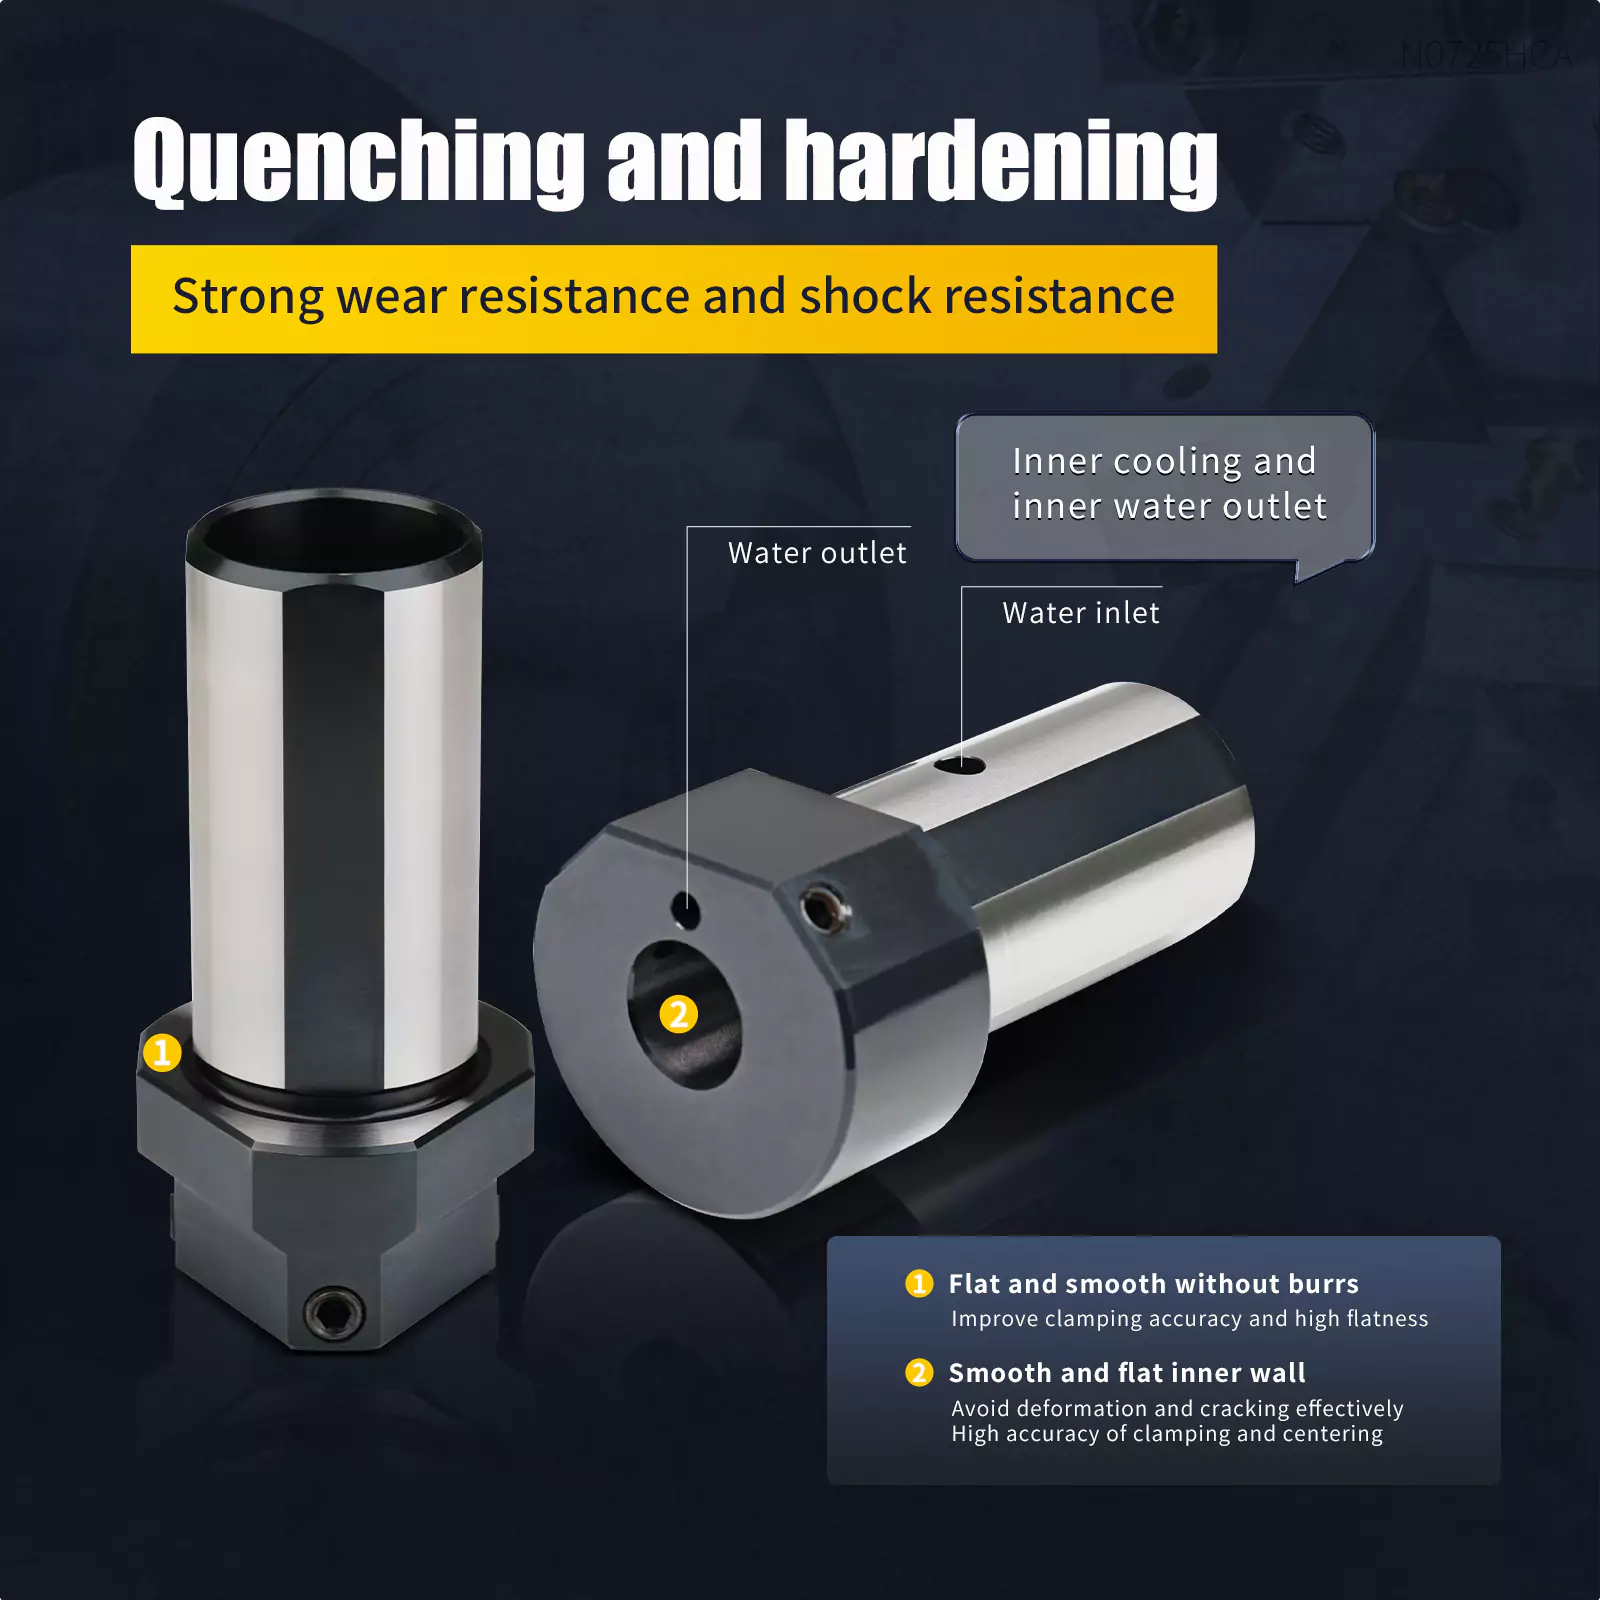 CNC Boring Sleeve Socket D4016 for MAZAK CNC Lathe, Internal Cooling Enhance the Efficiency